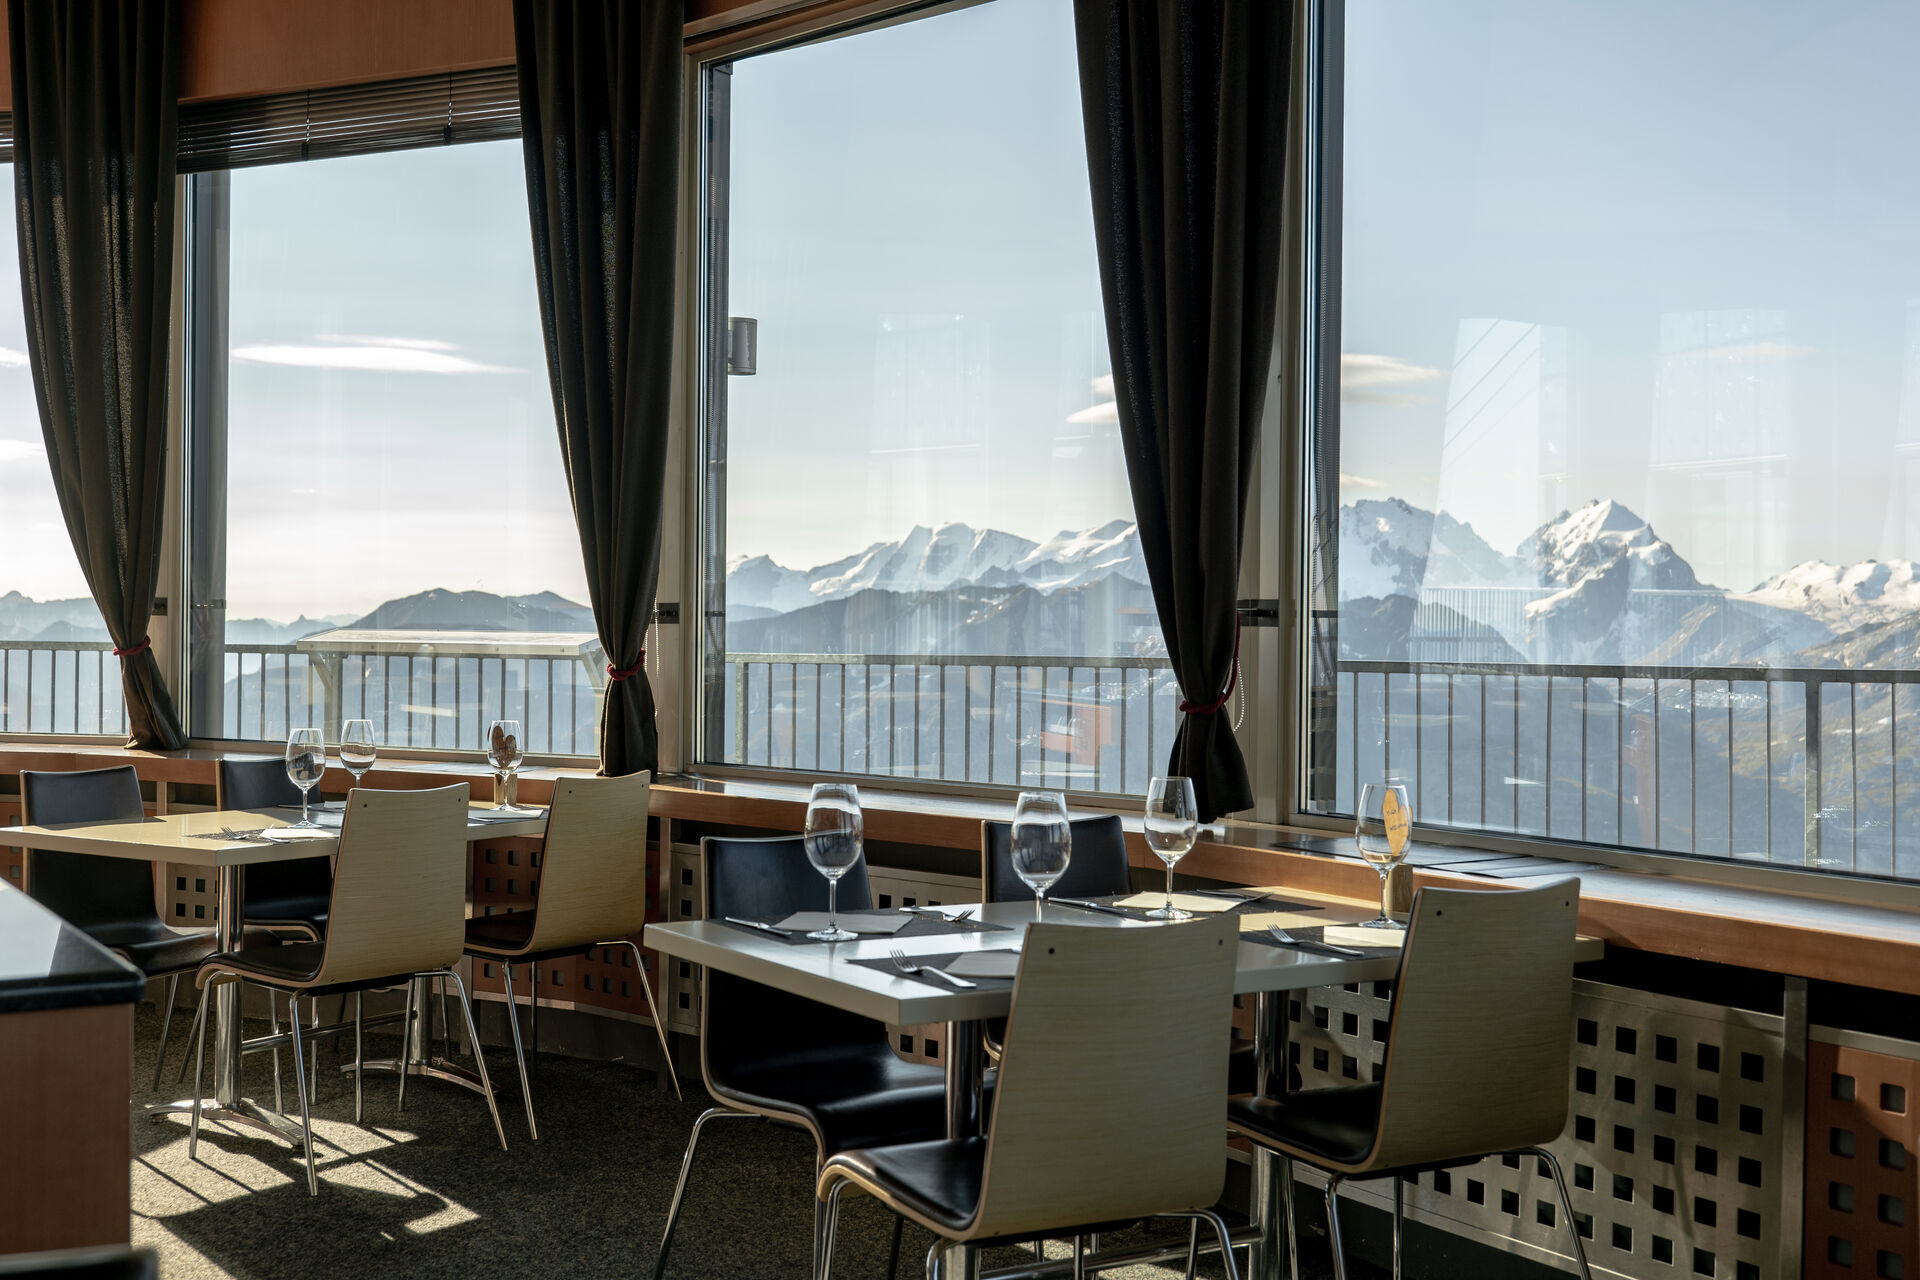 Restaurant Piz Nair 10000 Feet, St. Moritz